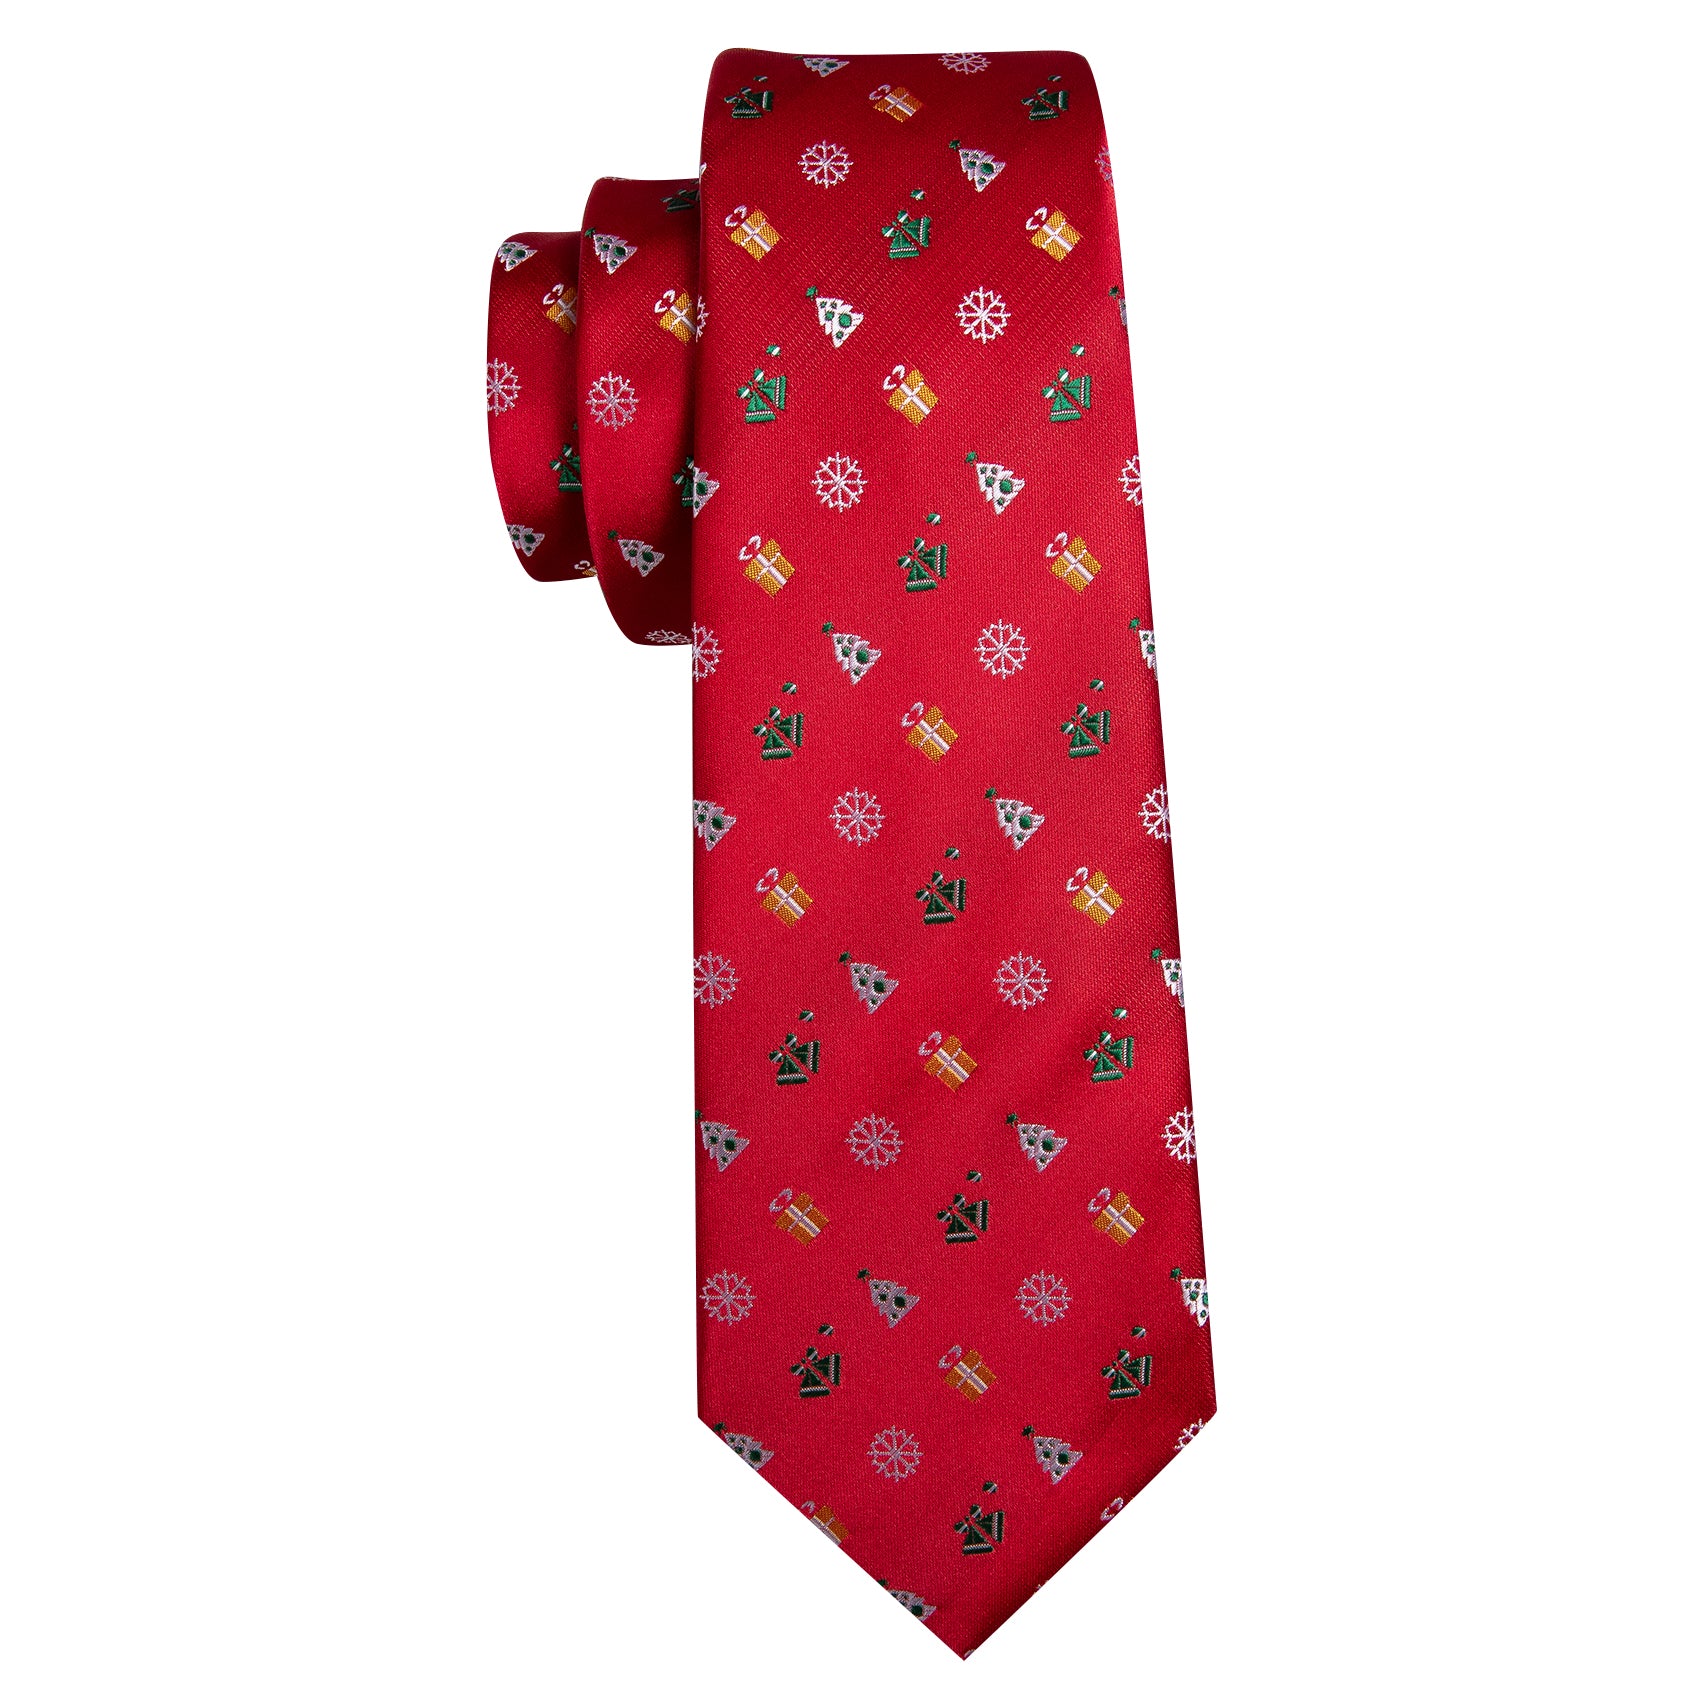 Barry.wang Red Tie Mens Christmas Pattern Tie Hanky Cufflinks Set